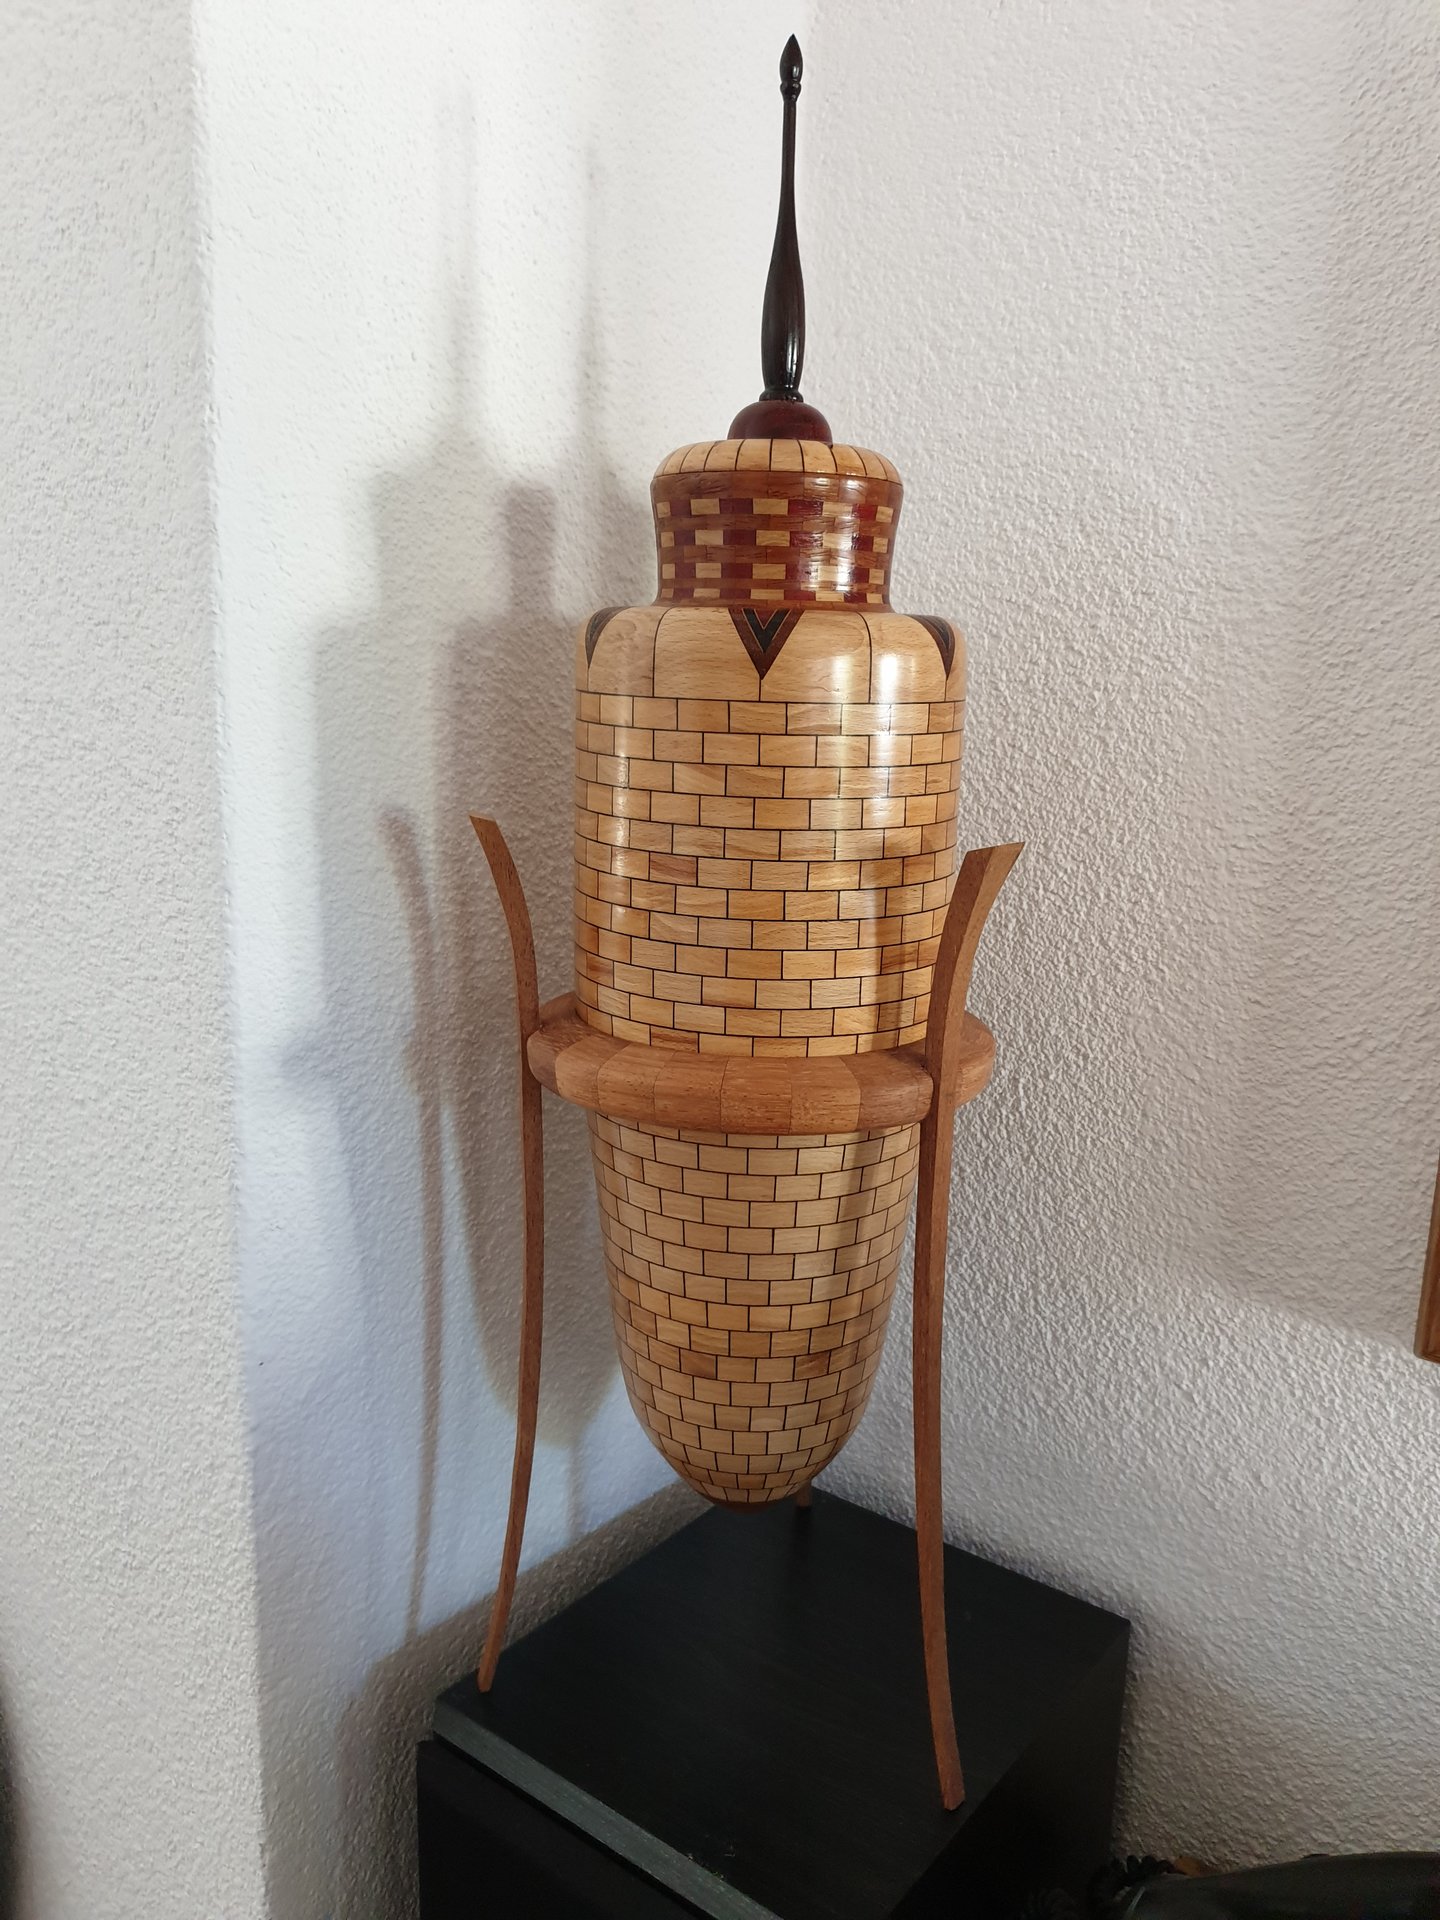 Vase/urn on a tripod stand